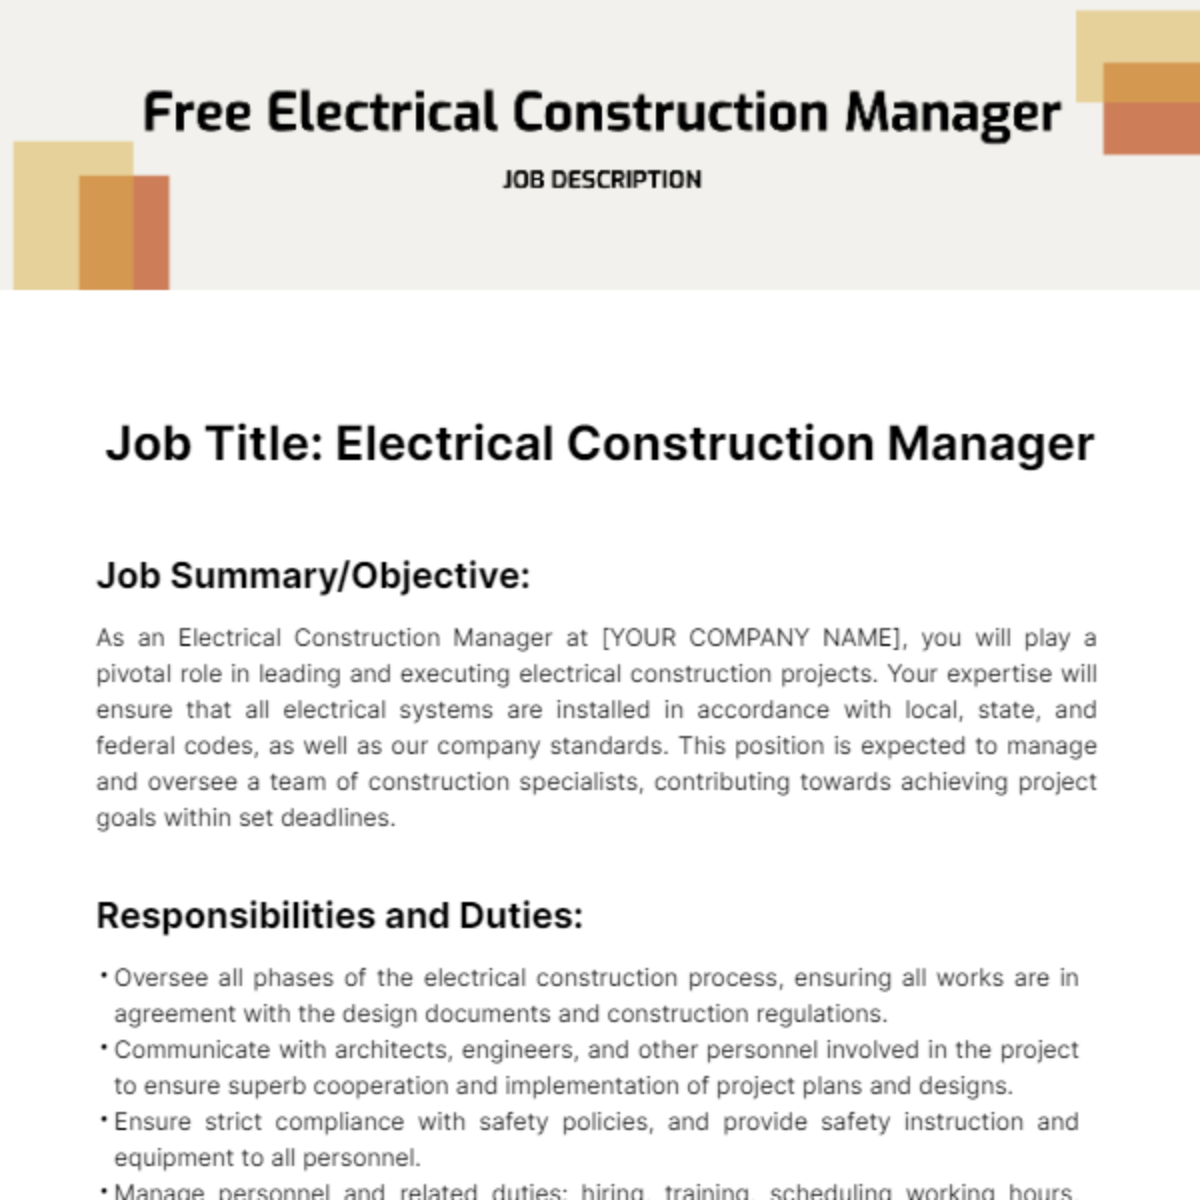 Free Electrical Construction Manager Job Description Template